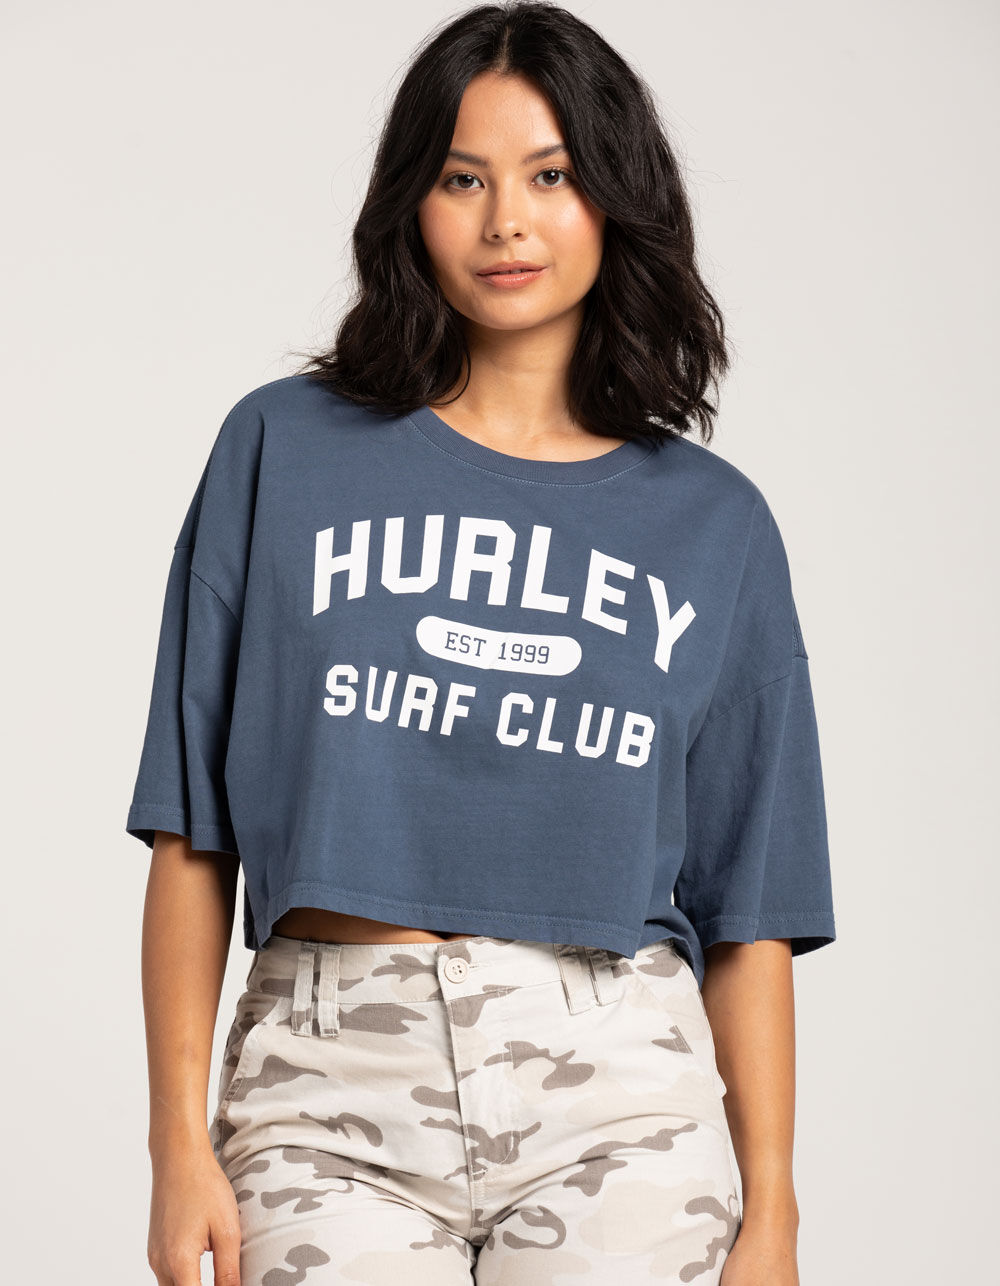 HURLEY Surf Club Womens Boyfriend Crop Tee - INDIGO